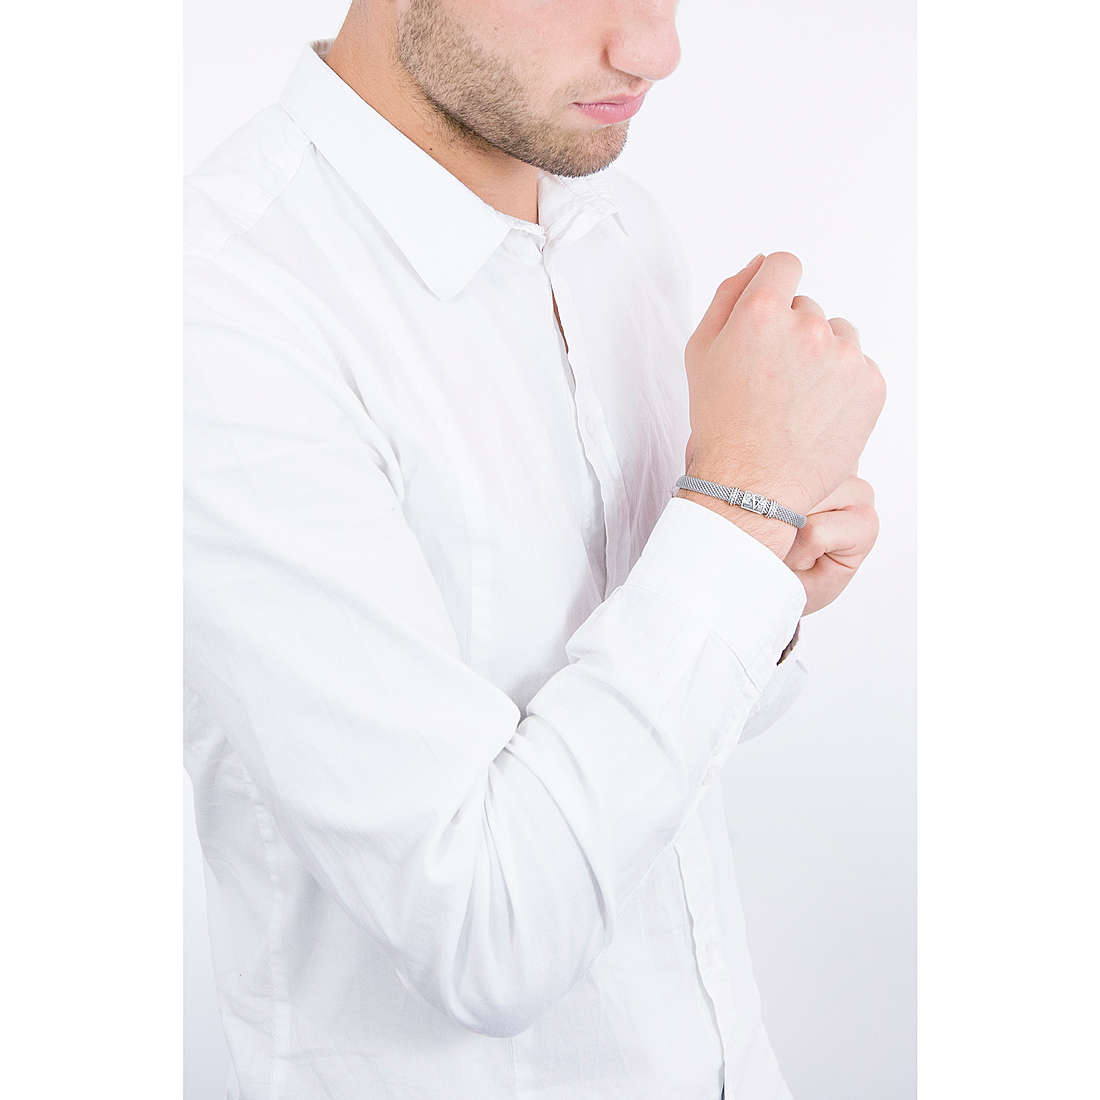 Cesare Paciotti bracelets Silver Initial man JPNC1896M4 wearing